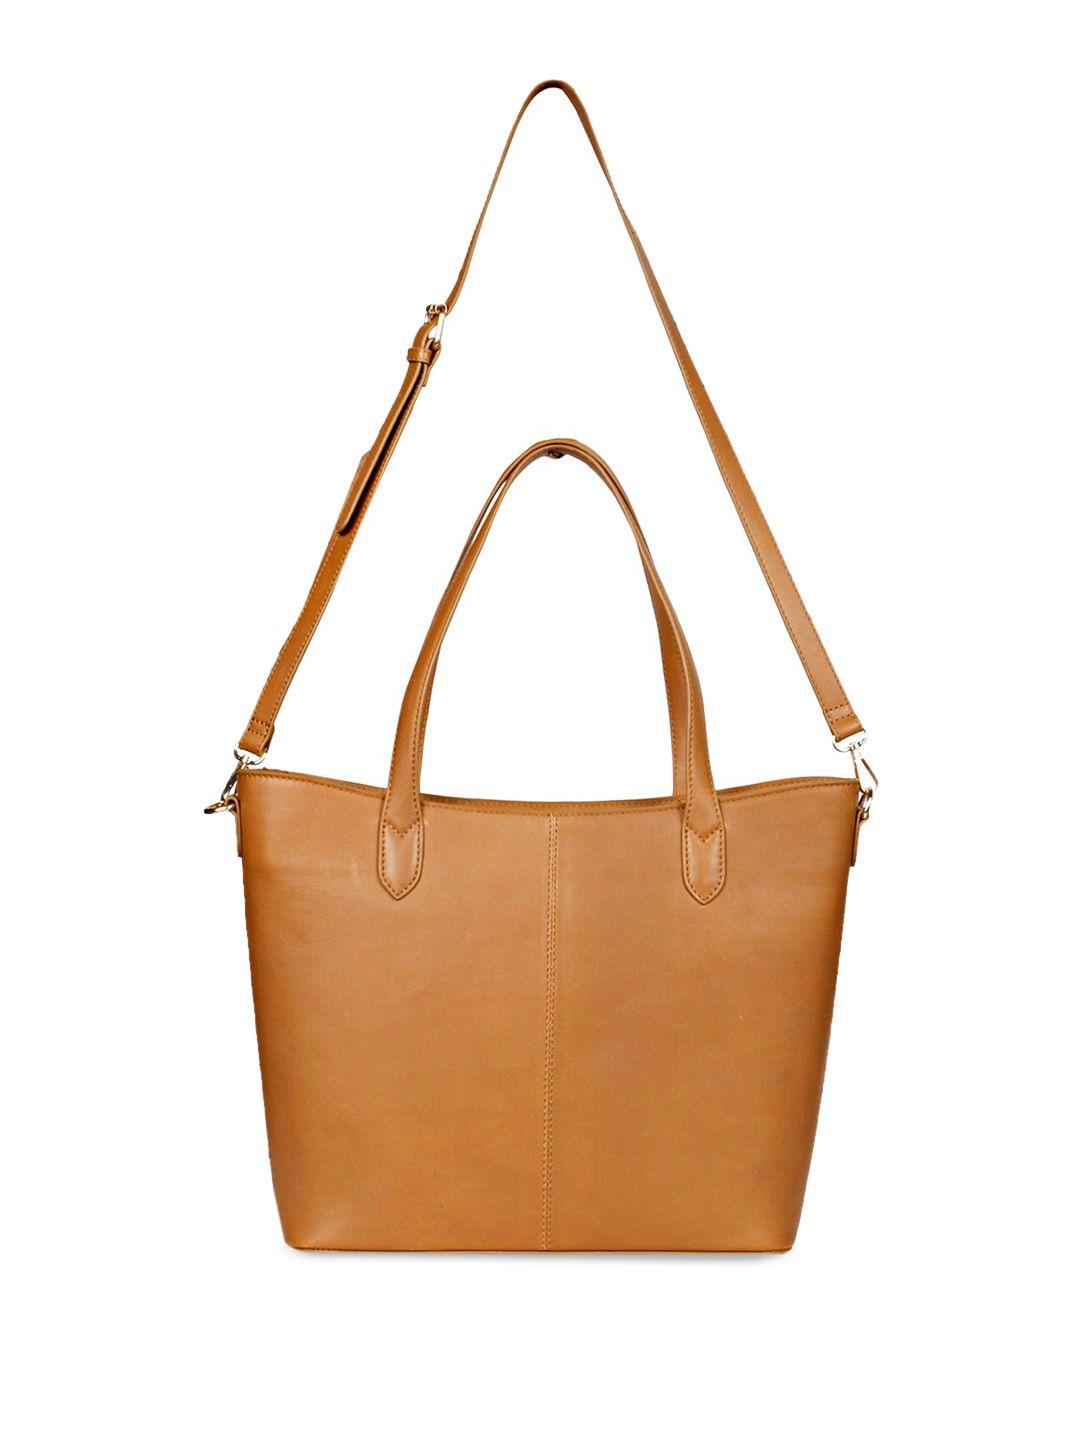 favore leather oversized structured shoulder bag with tasselled